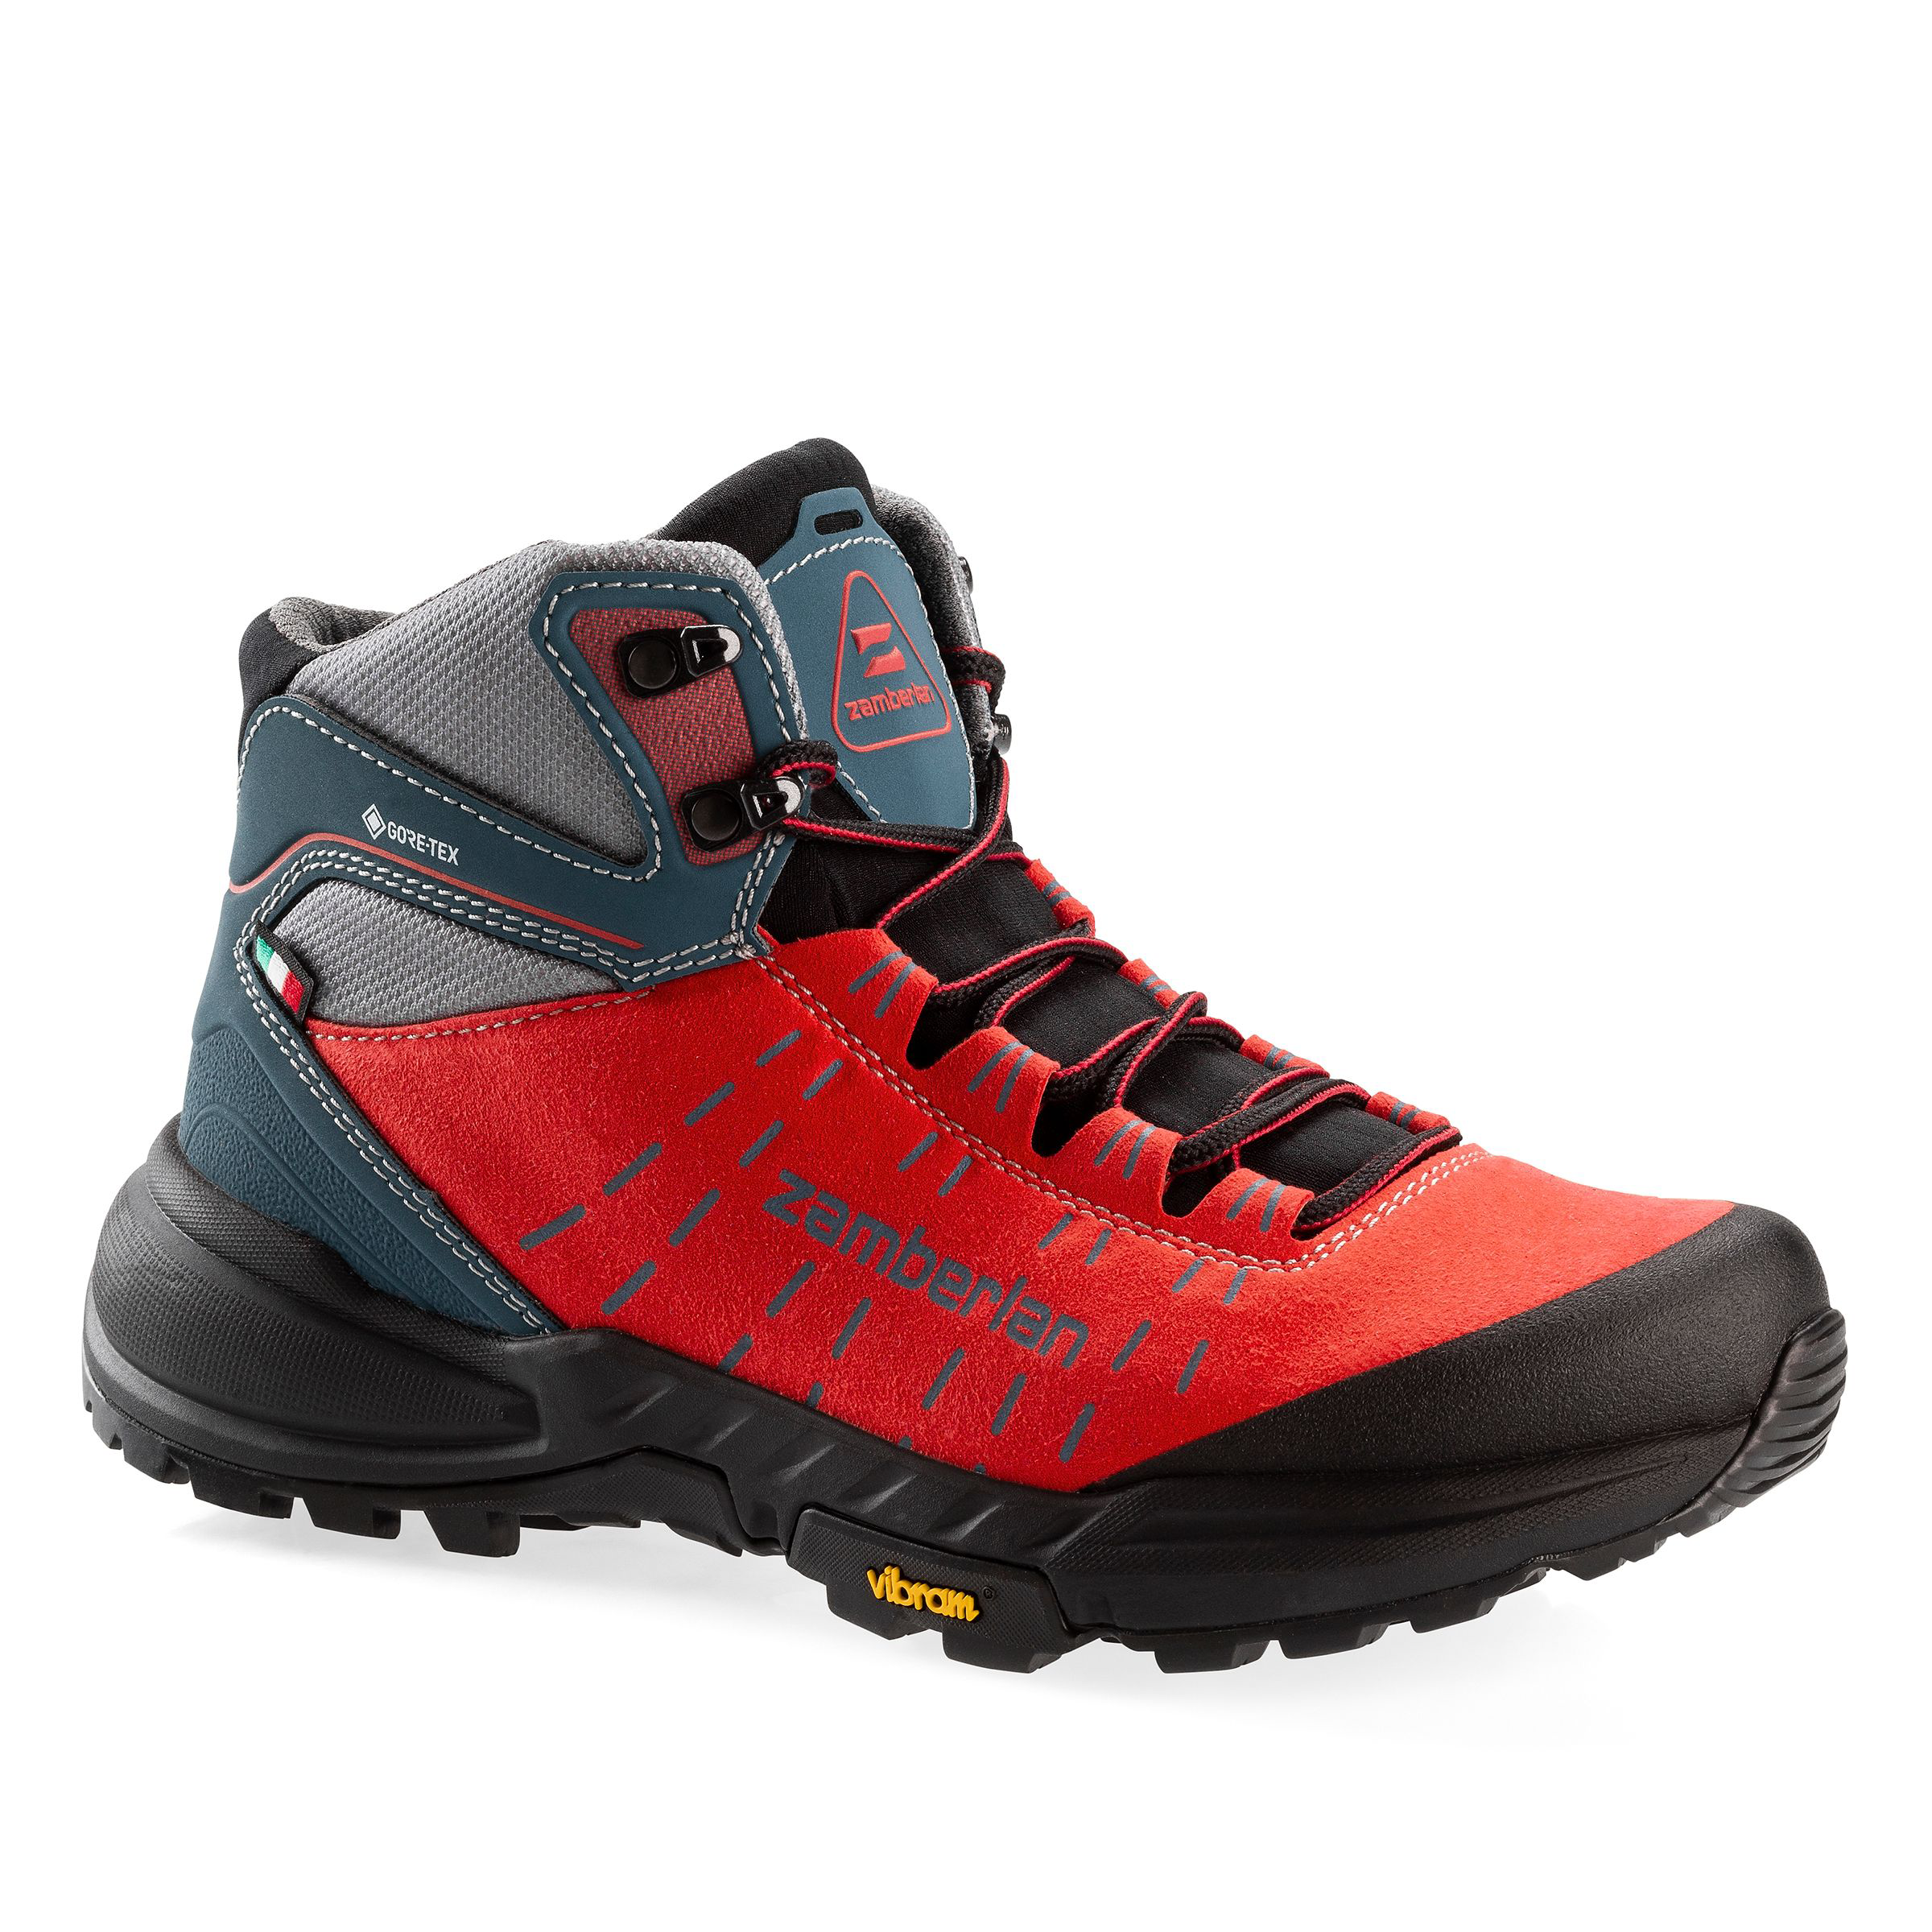 Zamberlan 334 Circe GTX Waterproof Hiking Boots for Ladies - Red - 8M